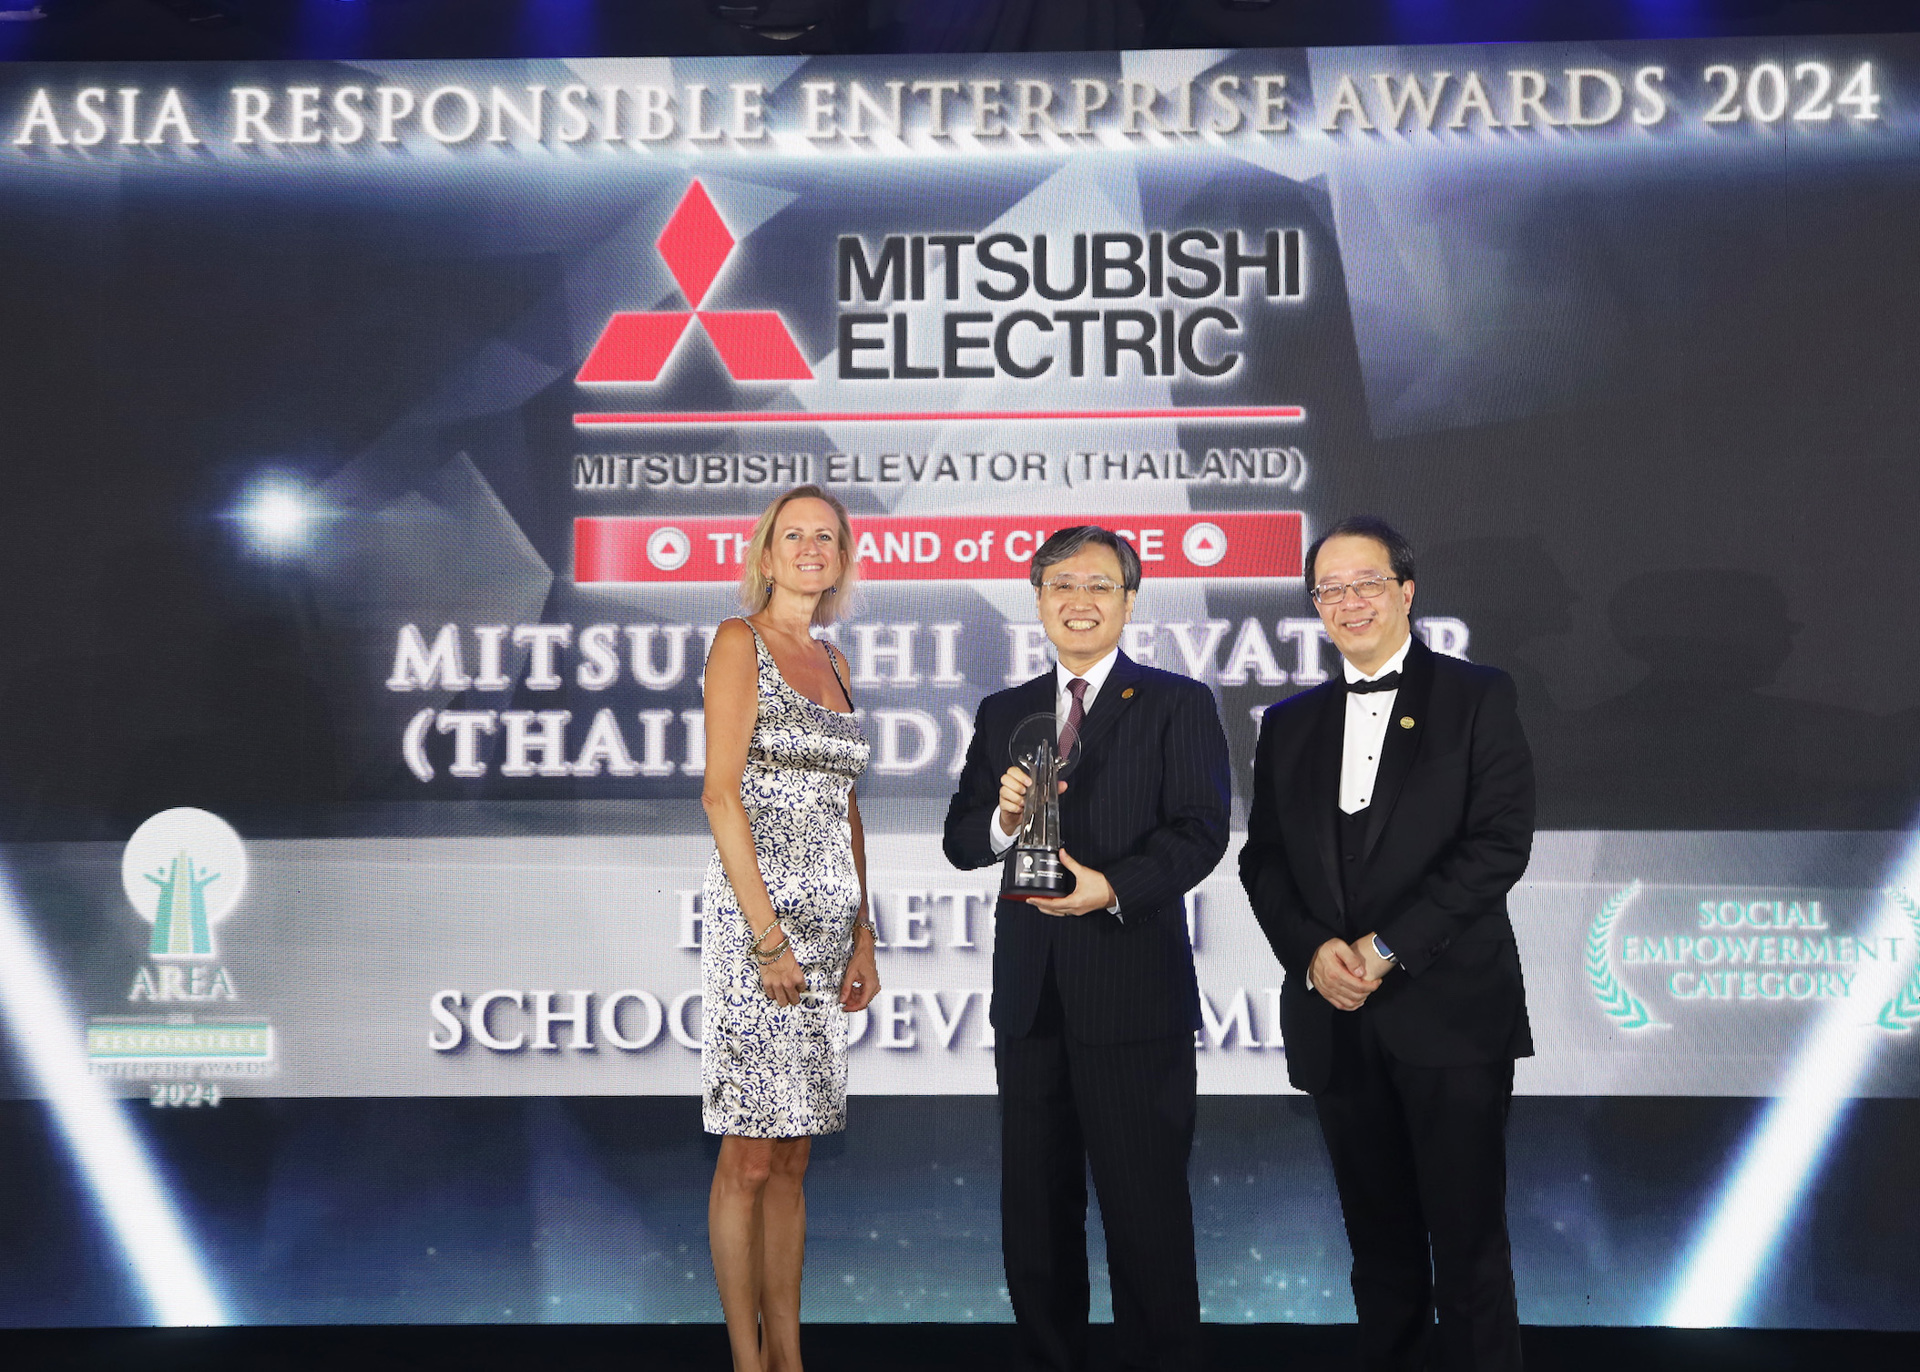 Mitsubishi Elevator (Thailand) Receives AREA 2024 Award